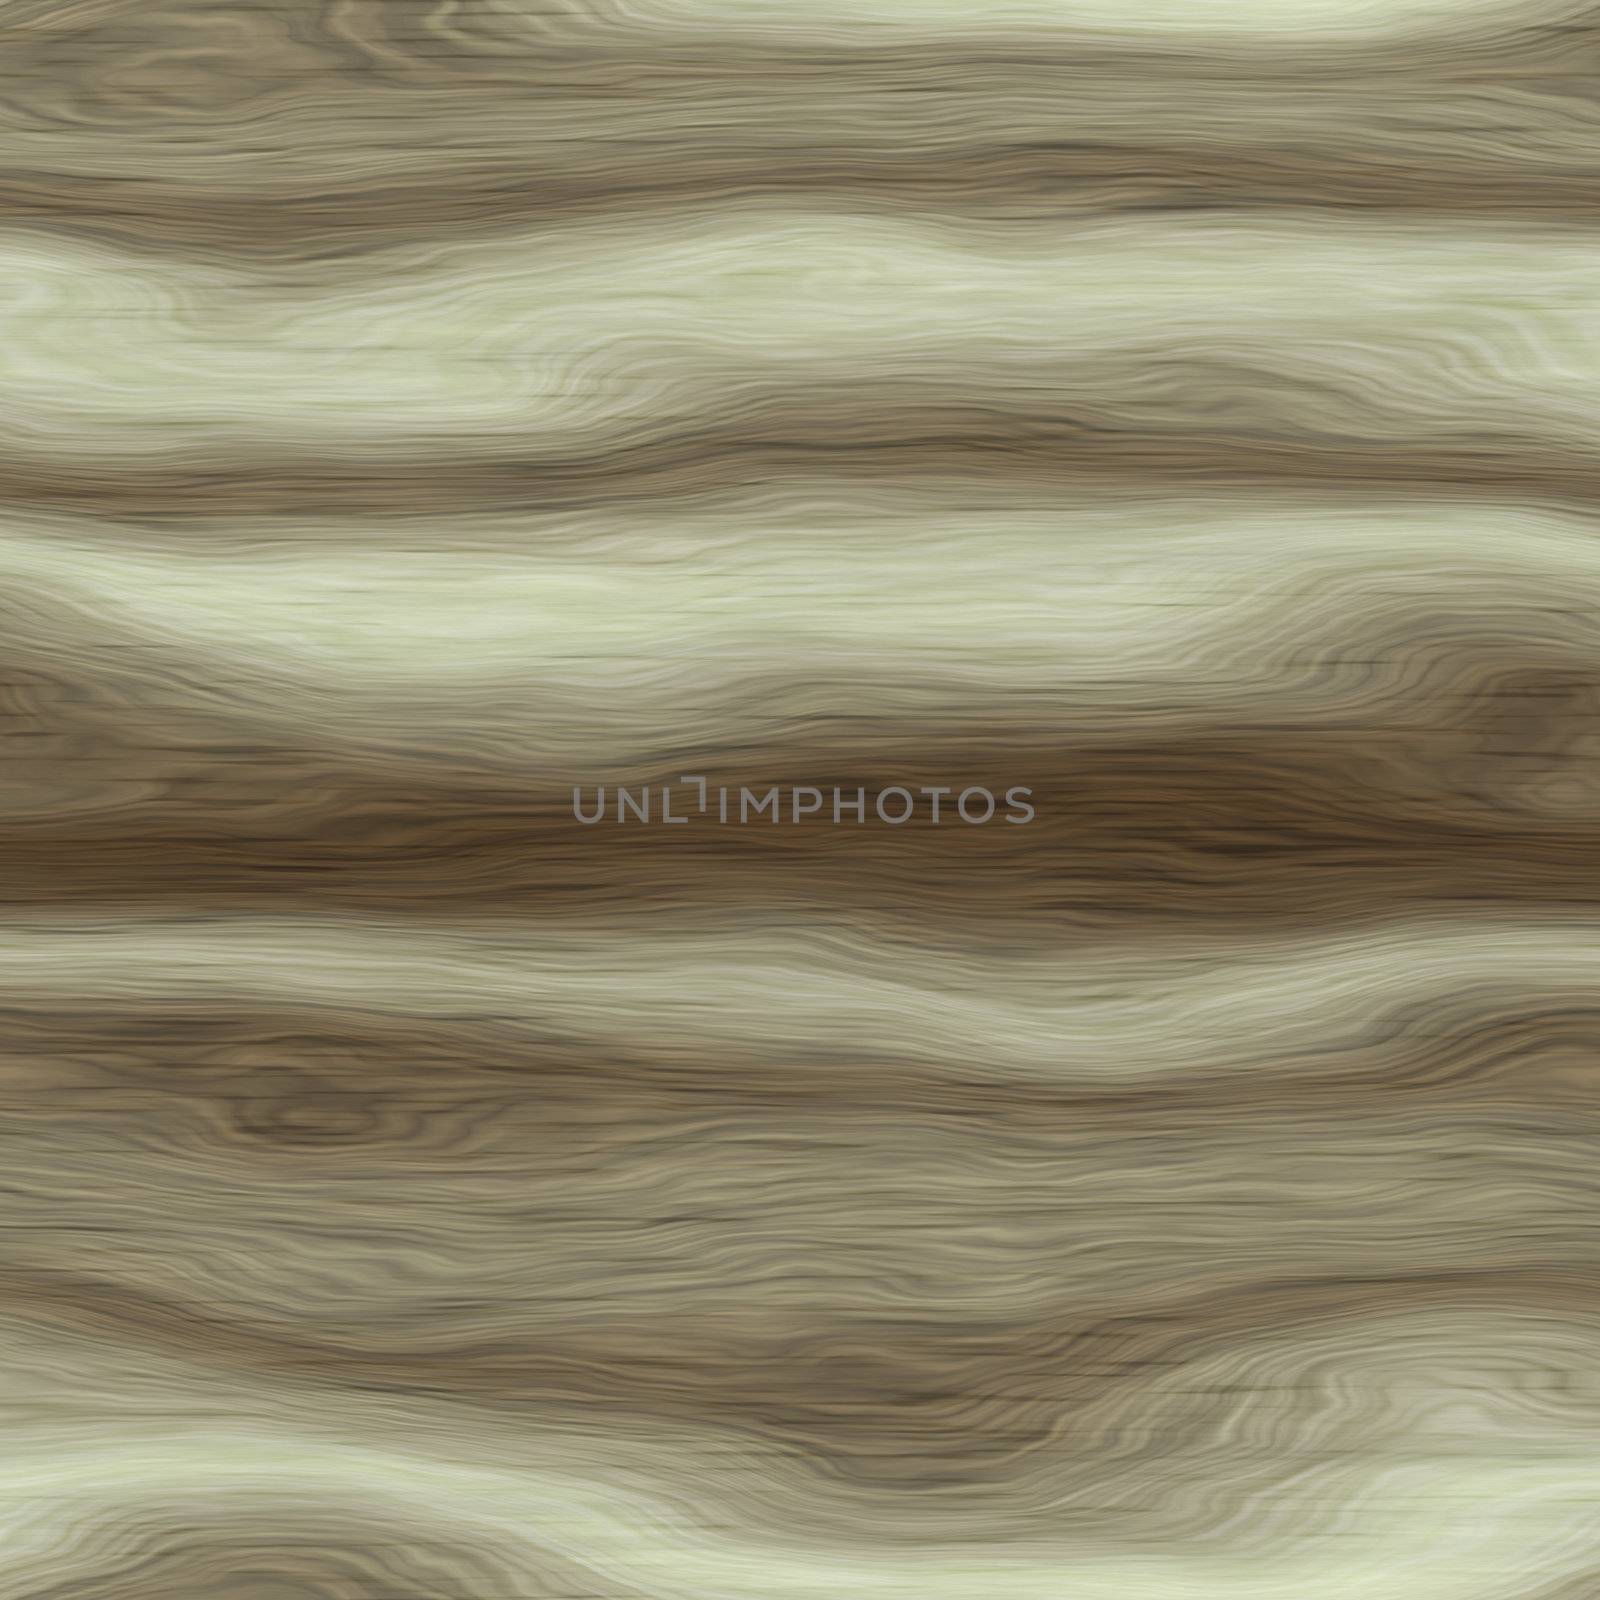 3d wood veneer, will tile seamlessly as a pattern

